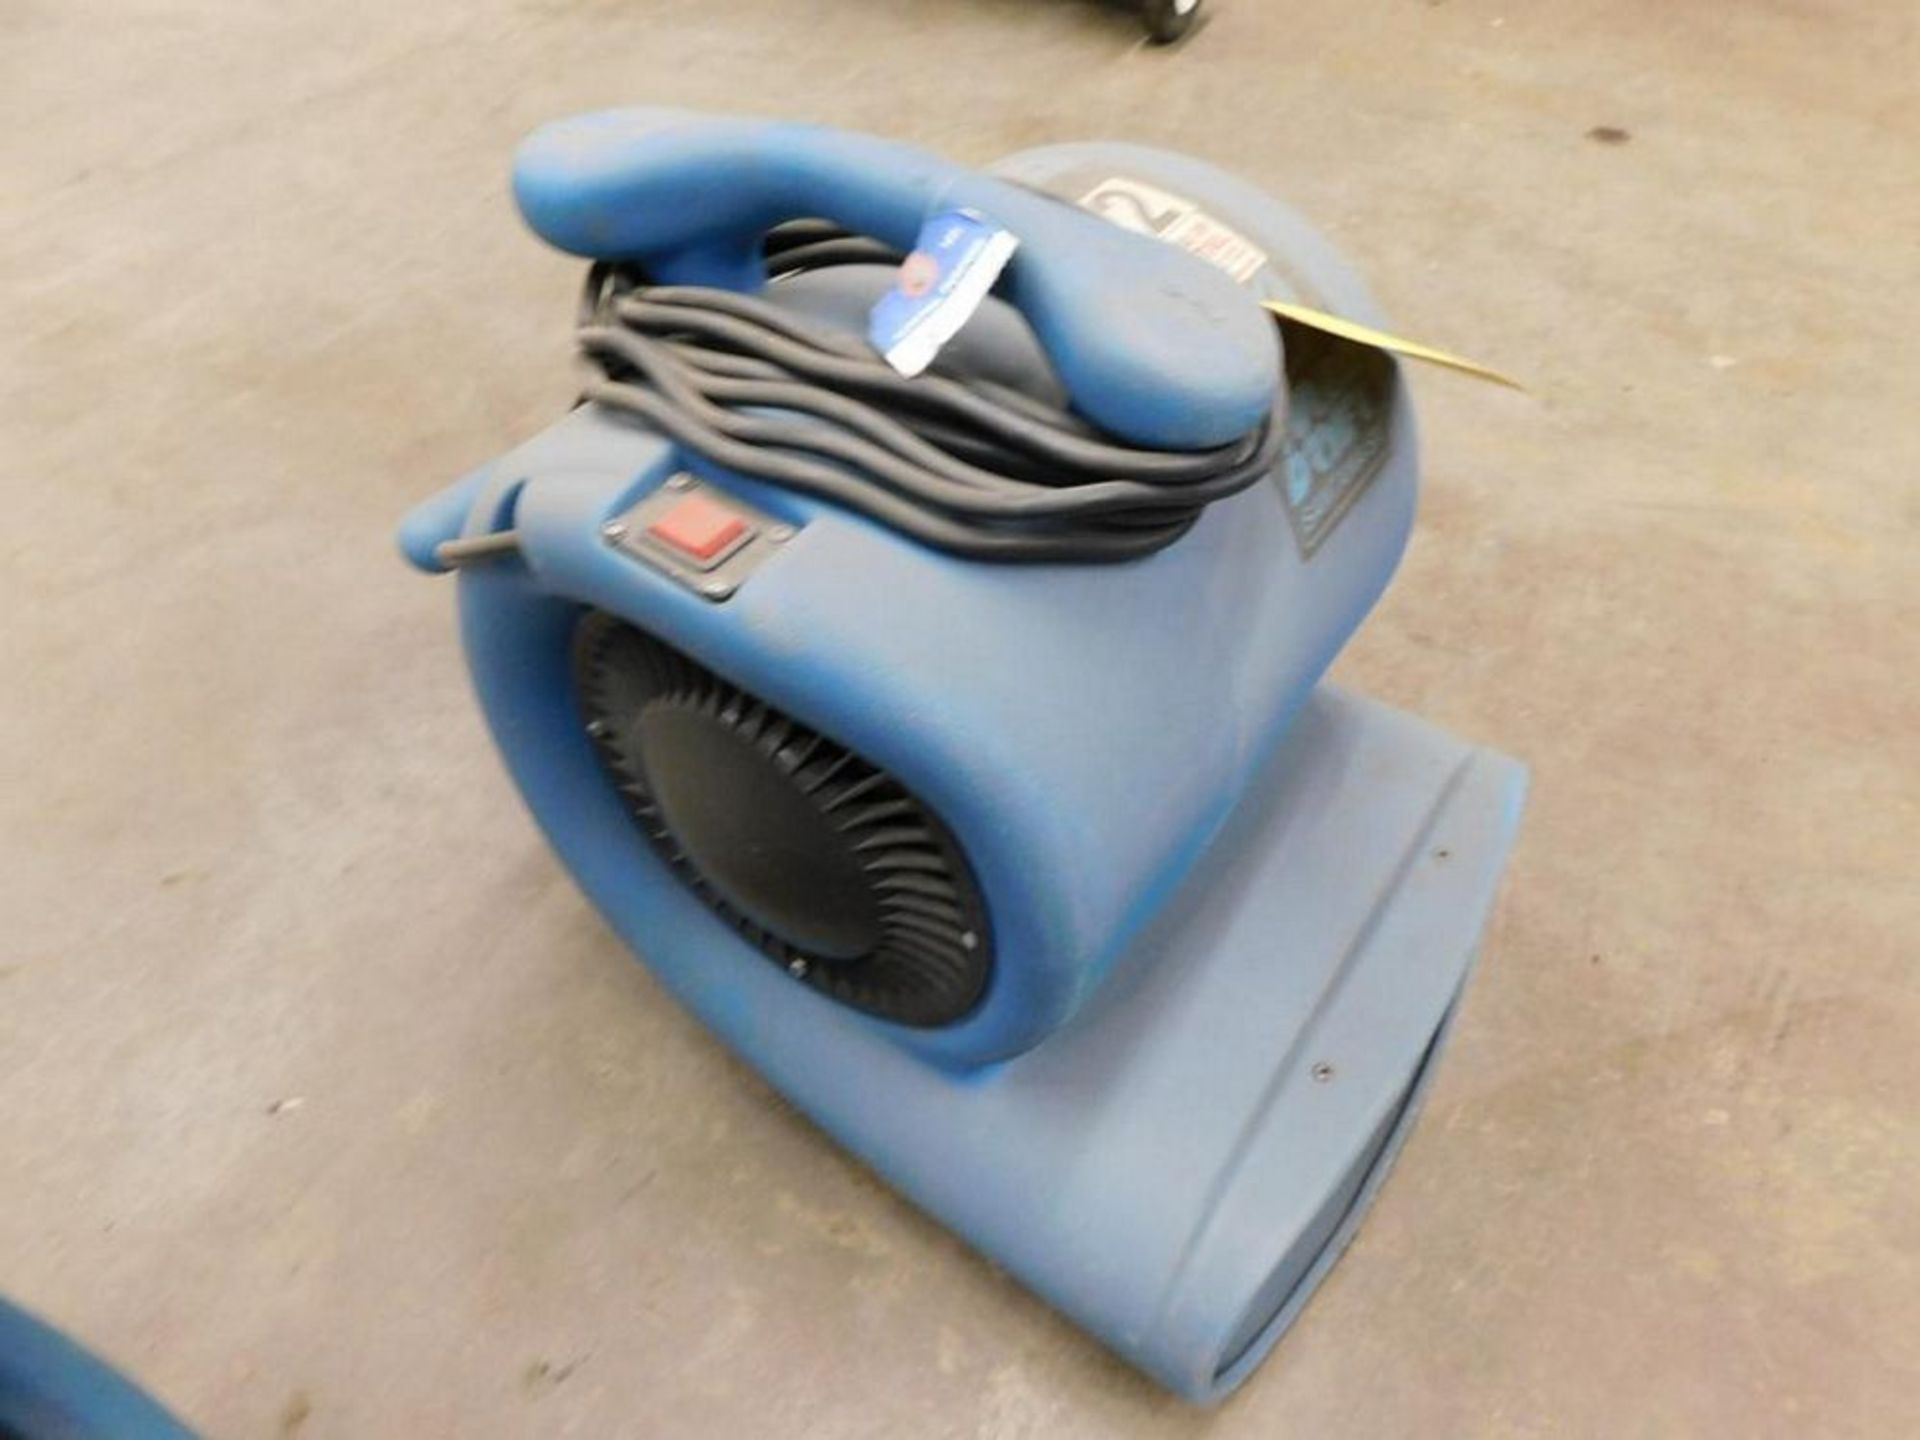 Dri-Eaz Santana SX Turbo Dryer Carpet Fan (LOCATION: 318 N. Milwaukee Ave., Wheeling, IL 60090) - Image 3 of 3